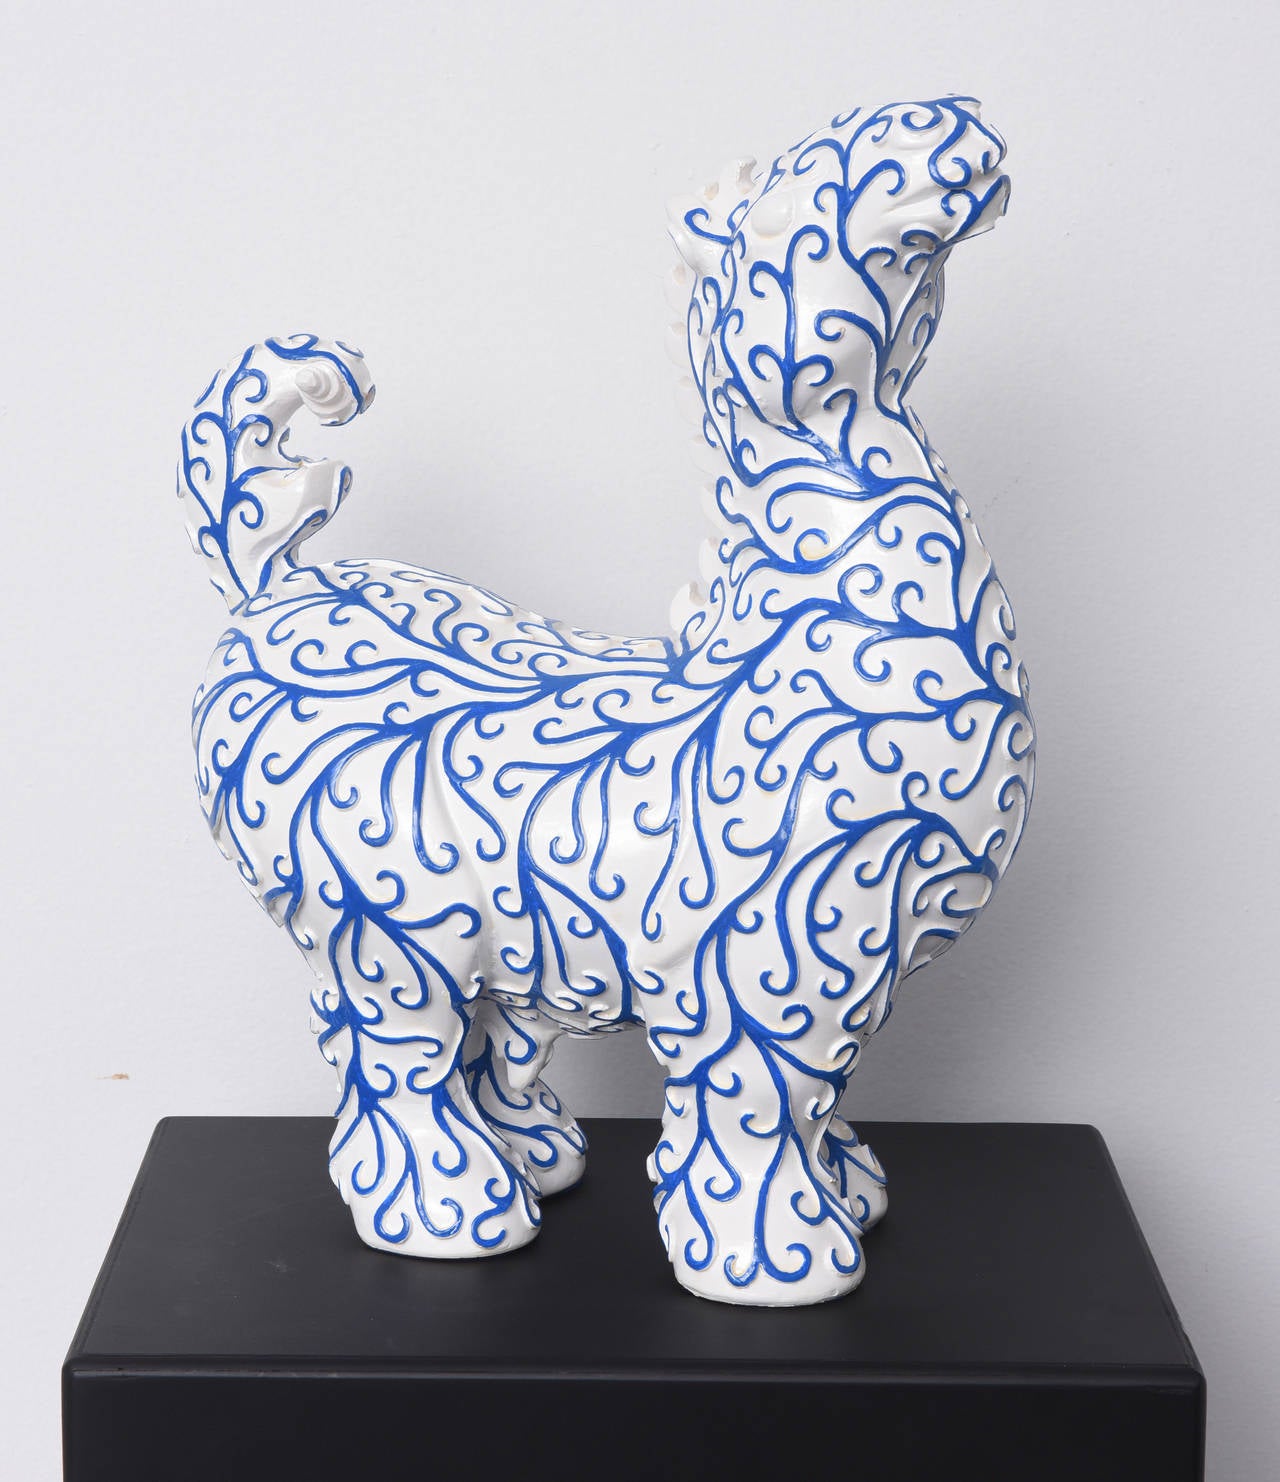 Arabesques Horse - Blue & White Resin sculpture - Contemporary Sculpture by Patrick Schumacher